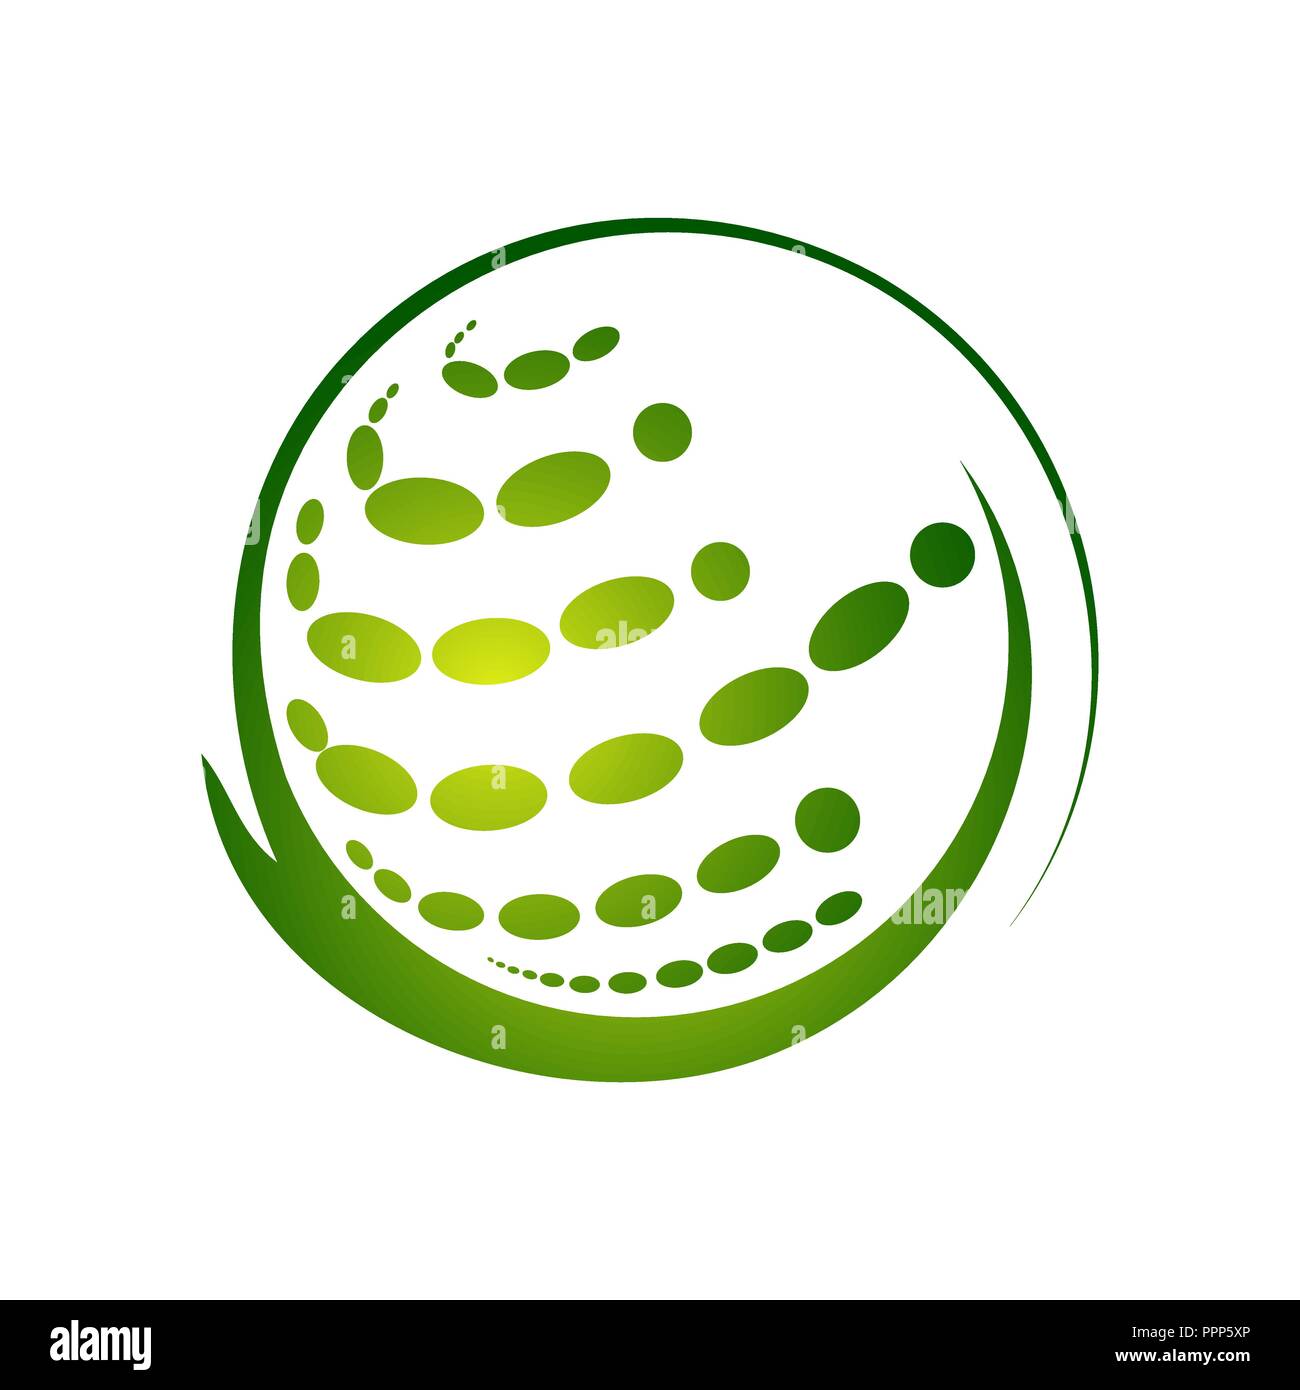 Sphere abstract vector logo design template. Business Technology circle icon Stock Vector